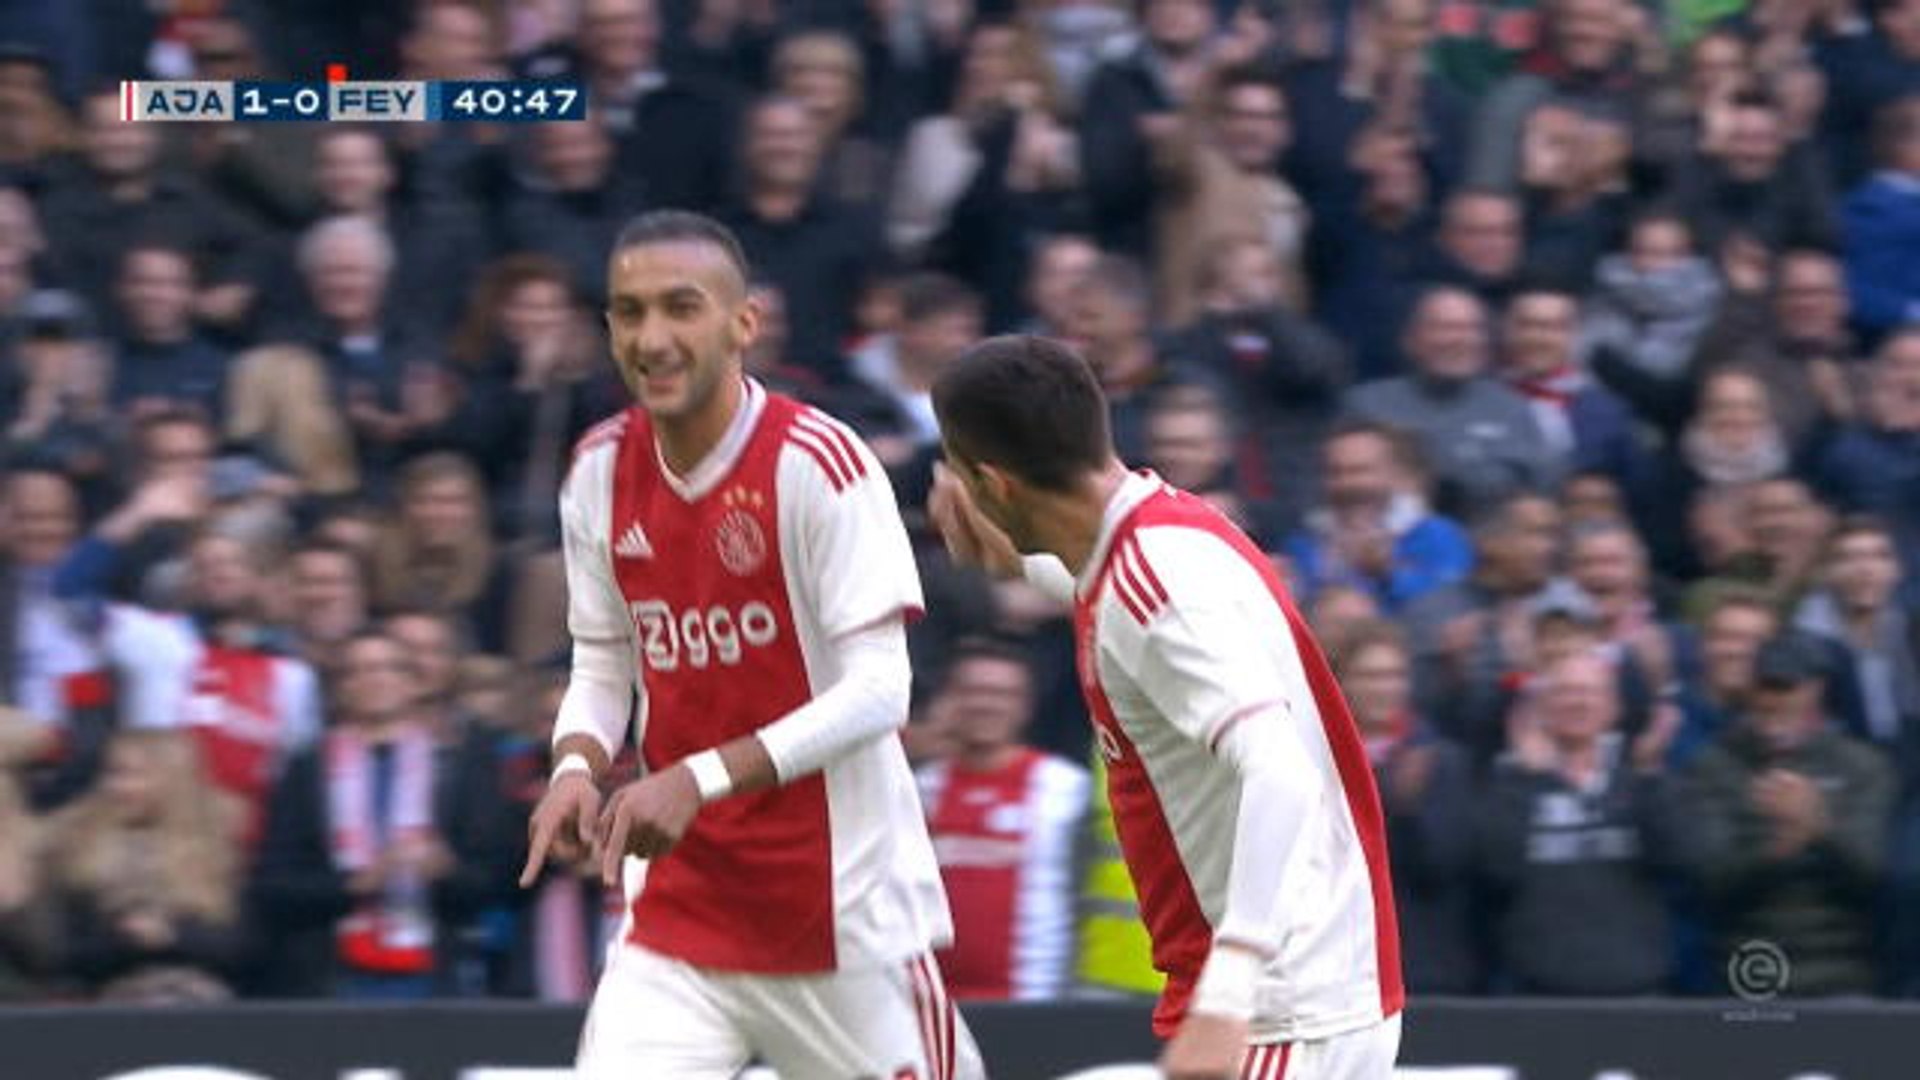 Pays-Bas - L'Ajax s'amuse face au Feyenoord - Vidéo Dailymotion